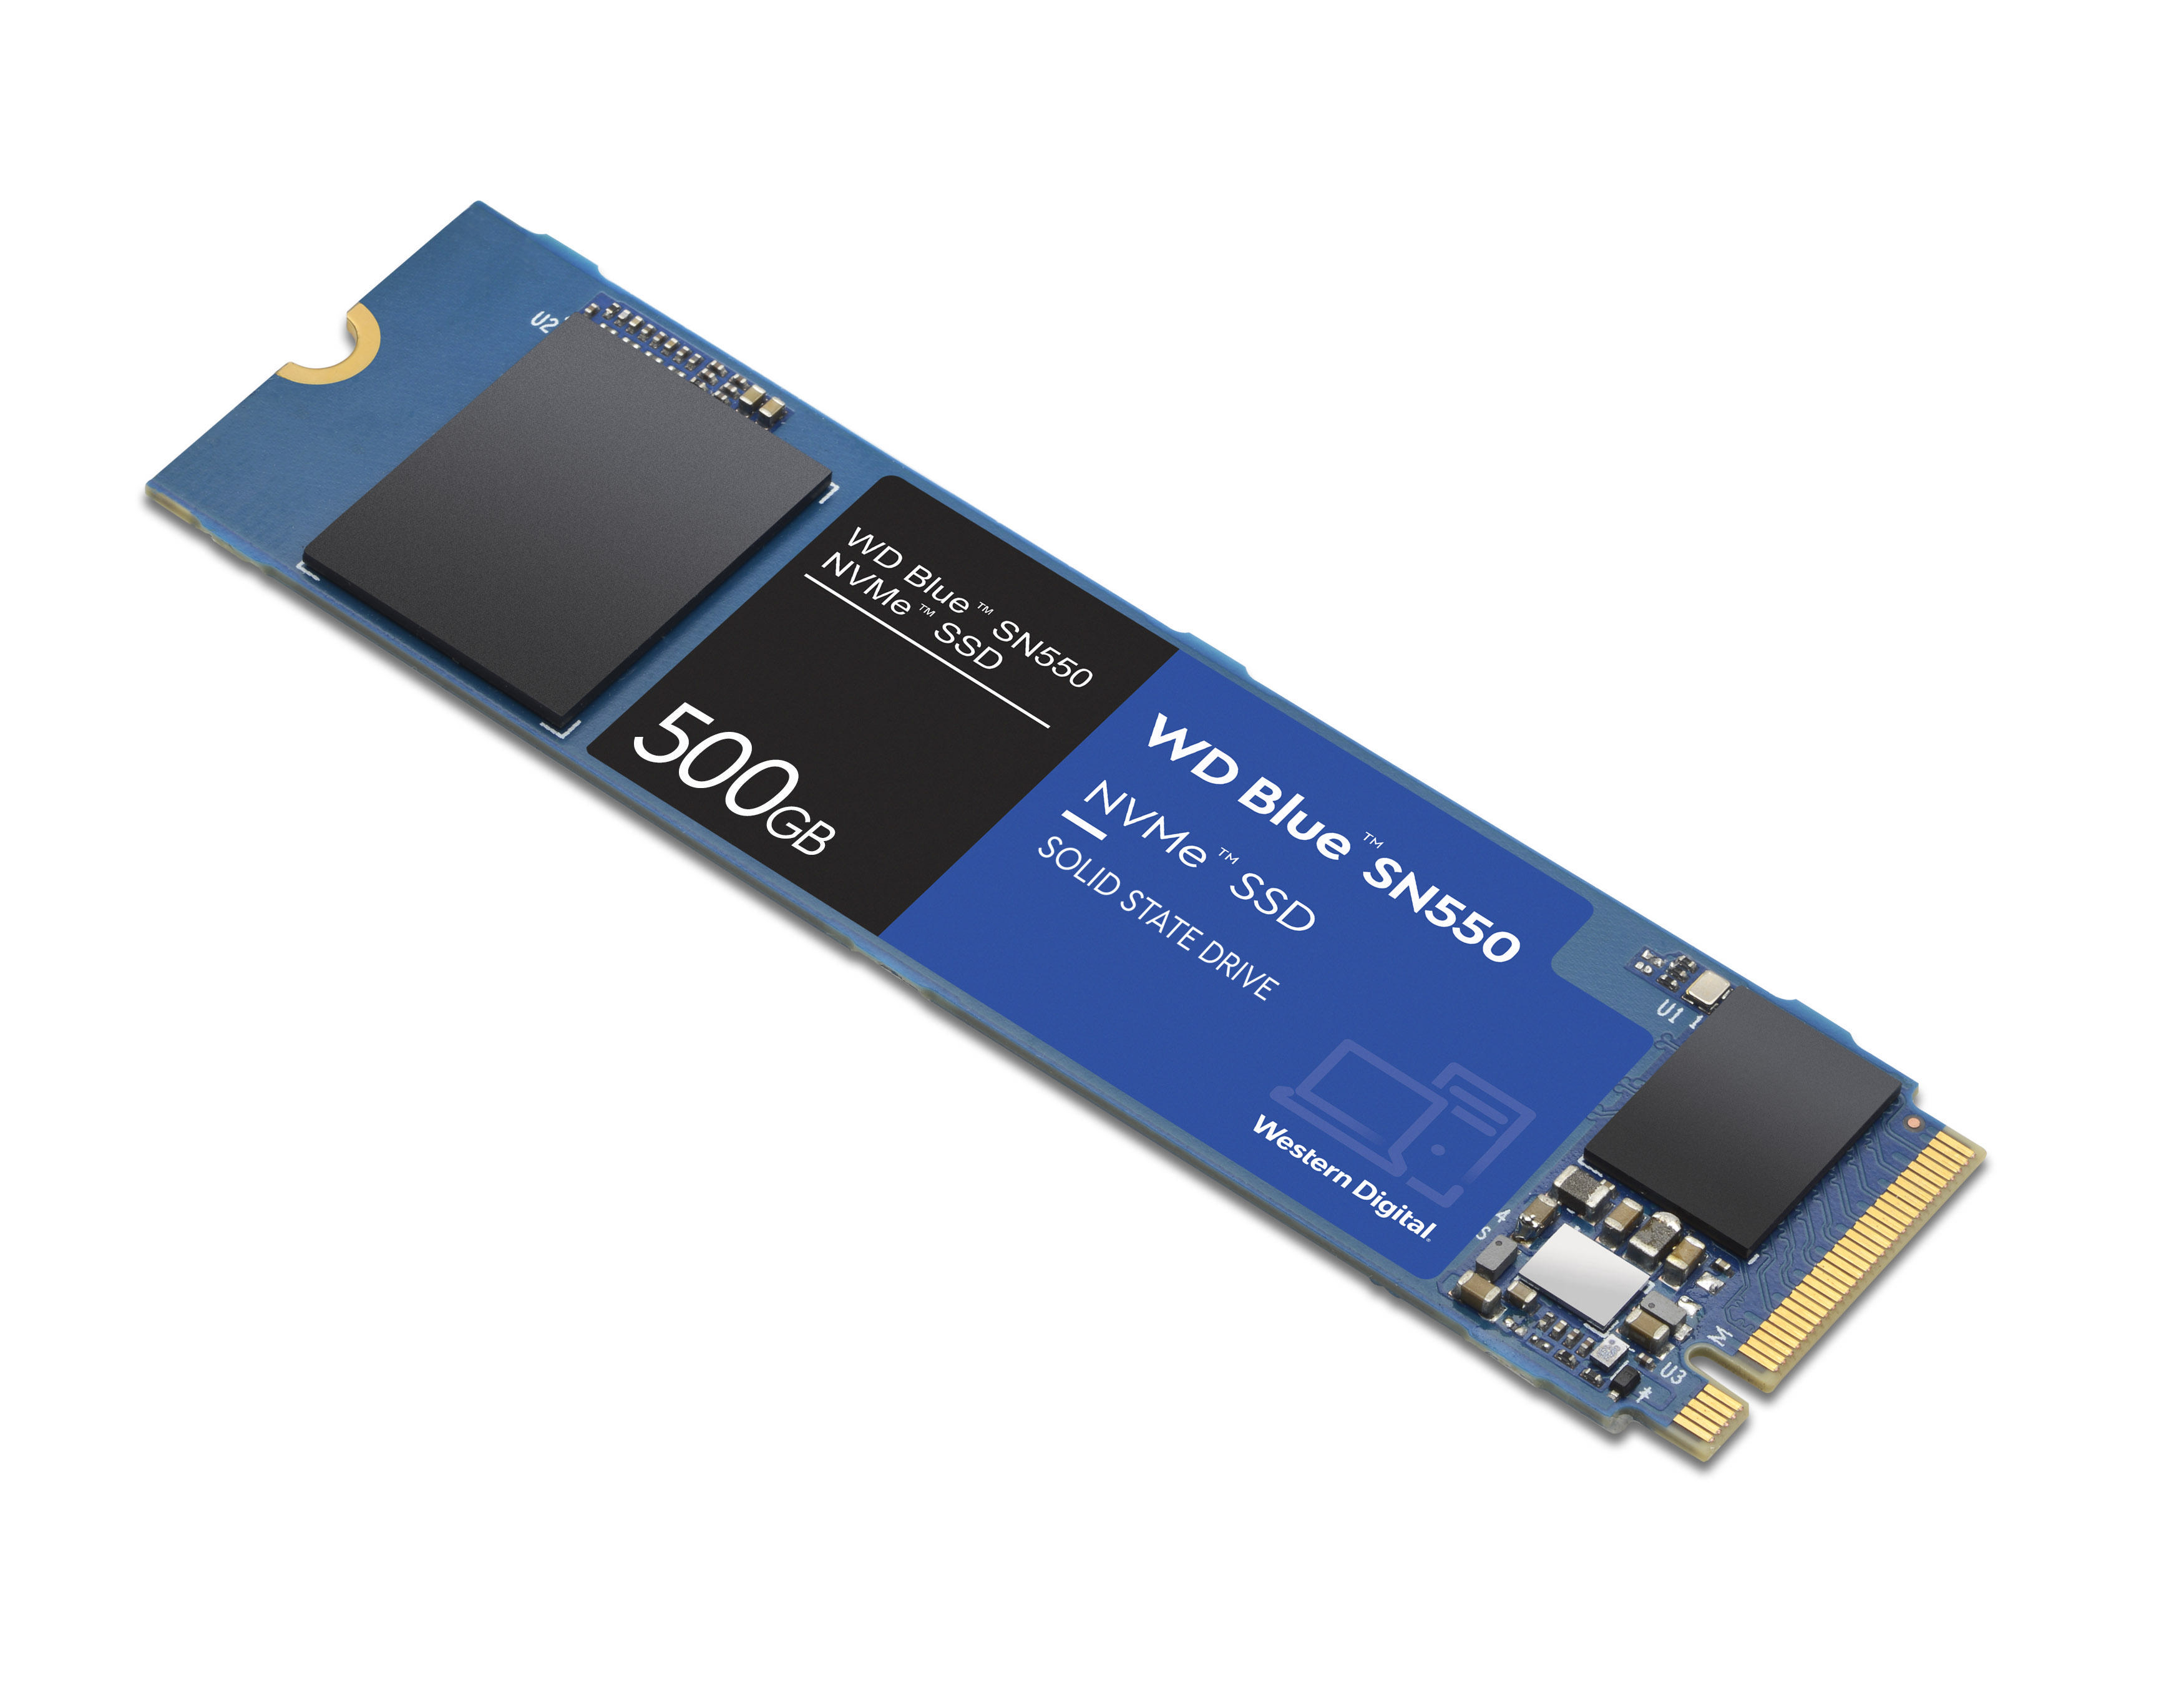 via intern PCIe, SN550 SSD M.2 GB Speicher, 500 WD Blue™